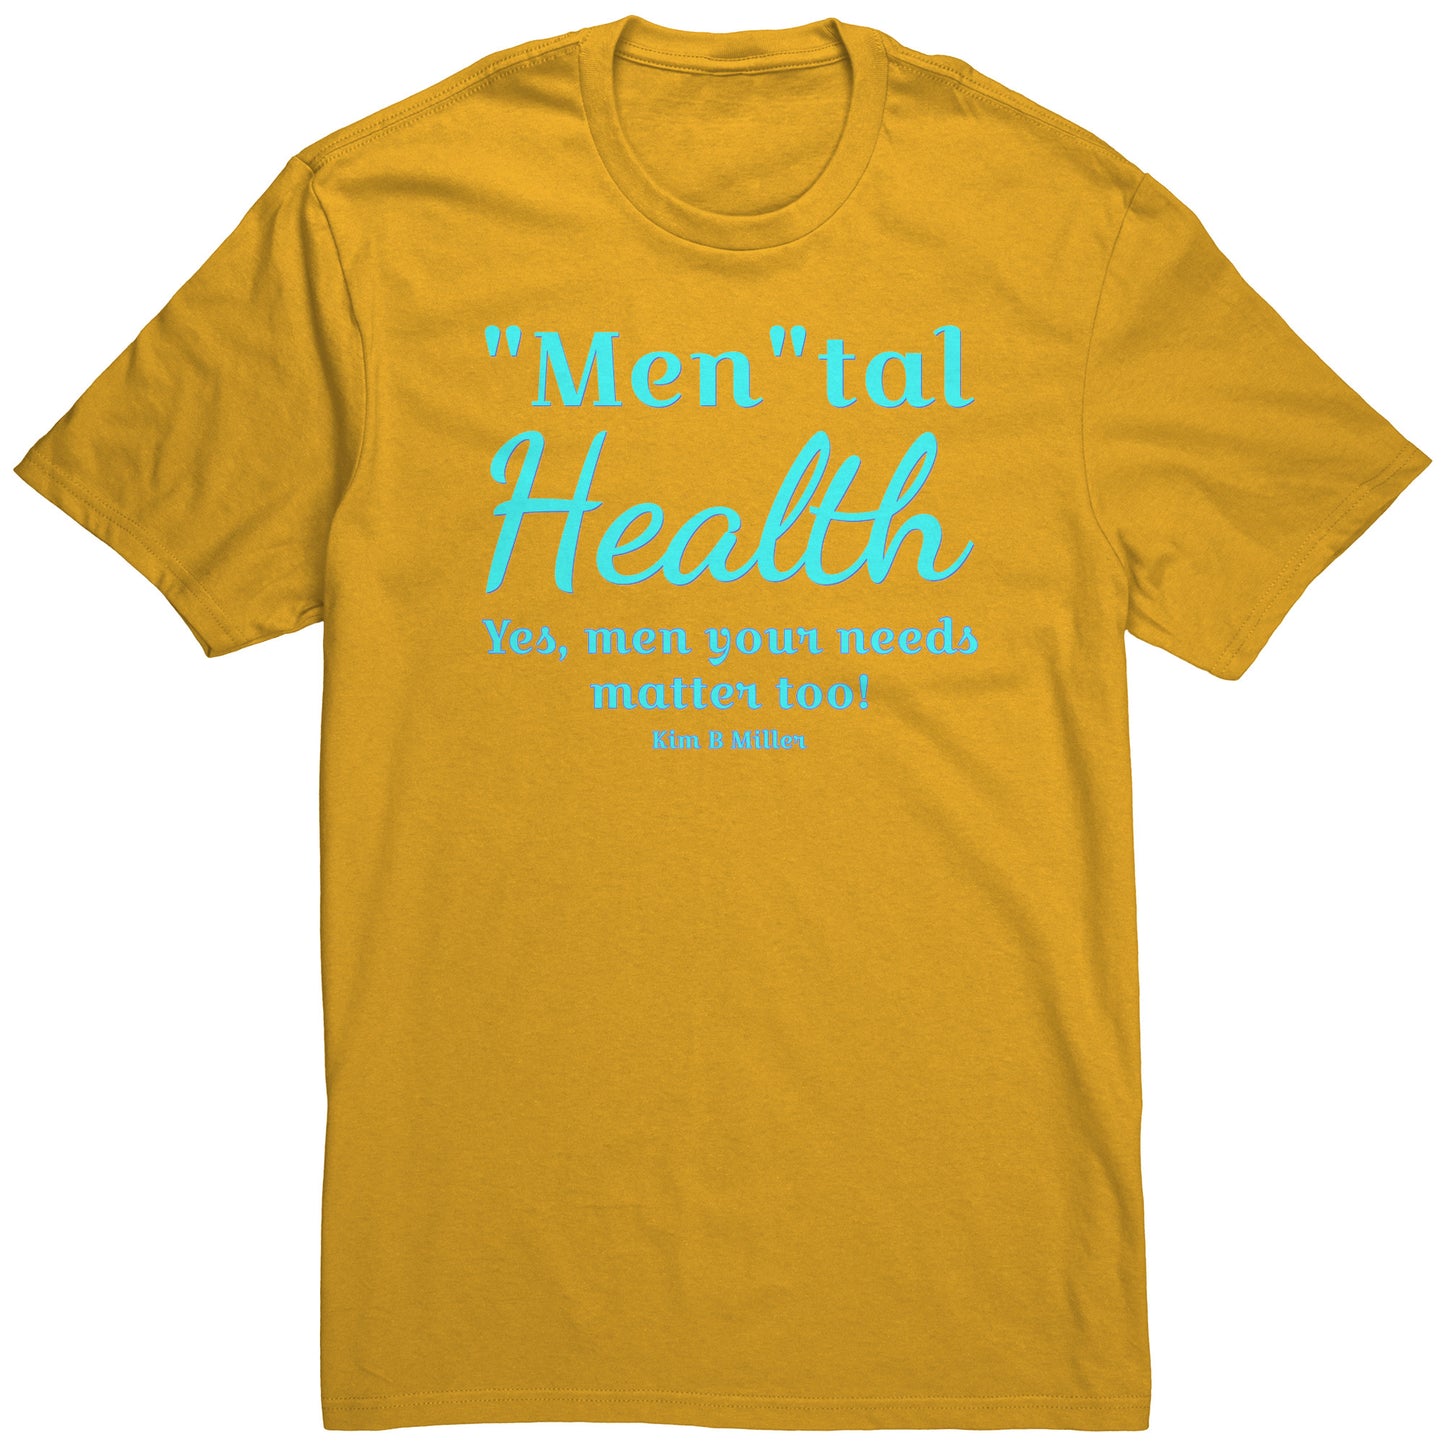 "Men"tal Health: 	 District Men's Shirt